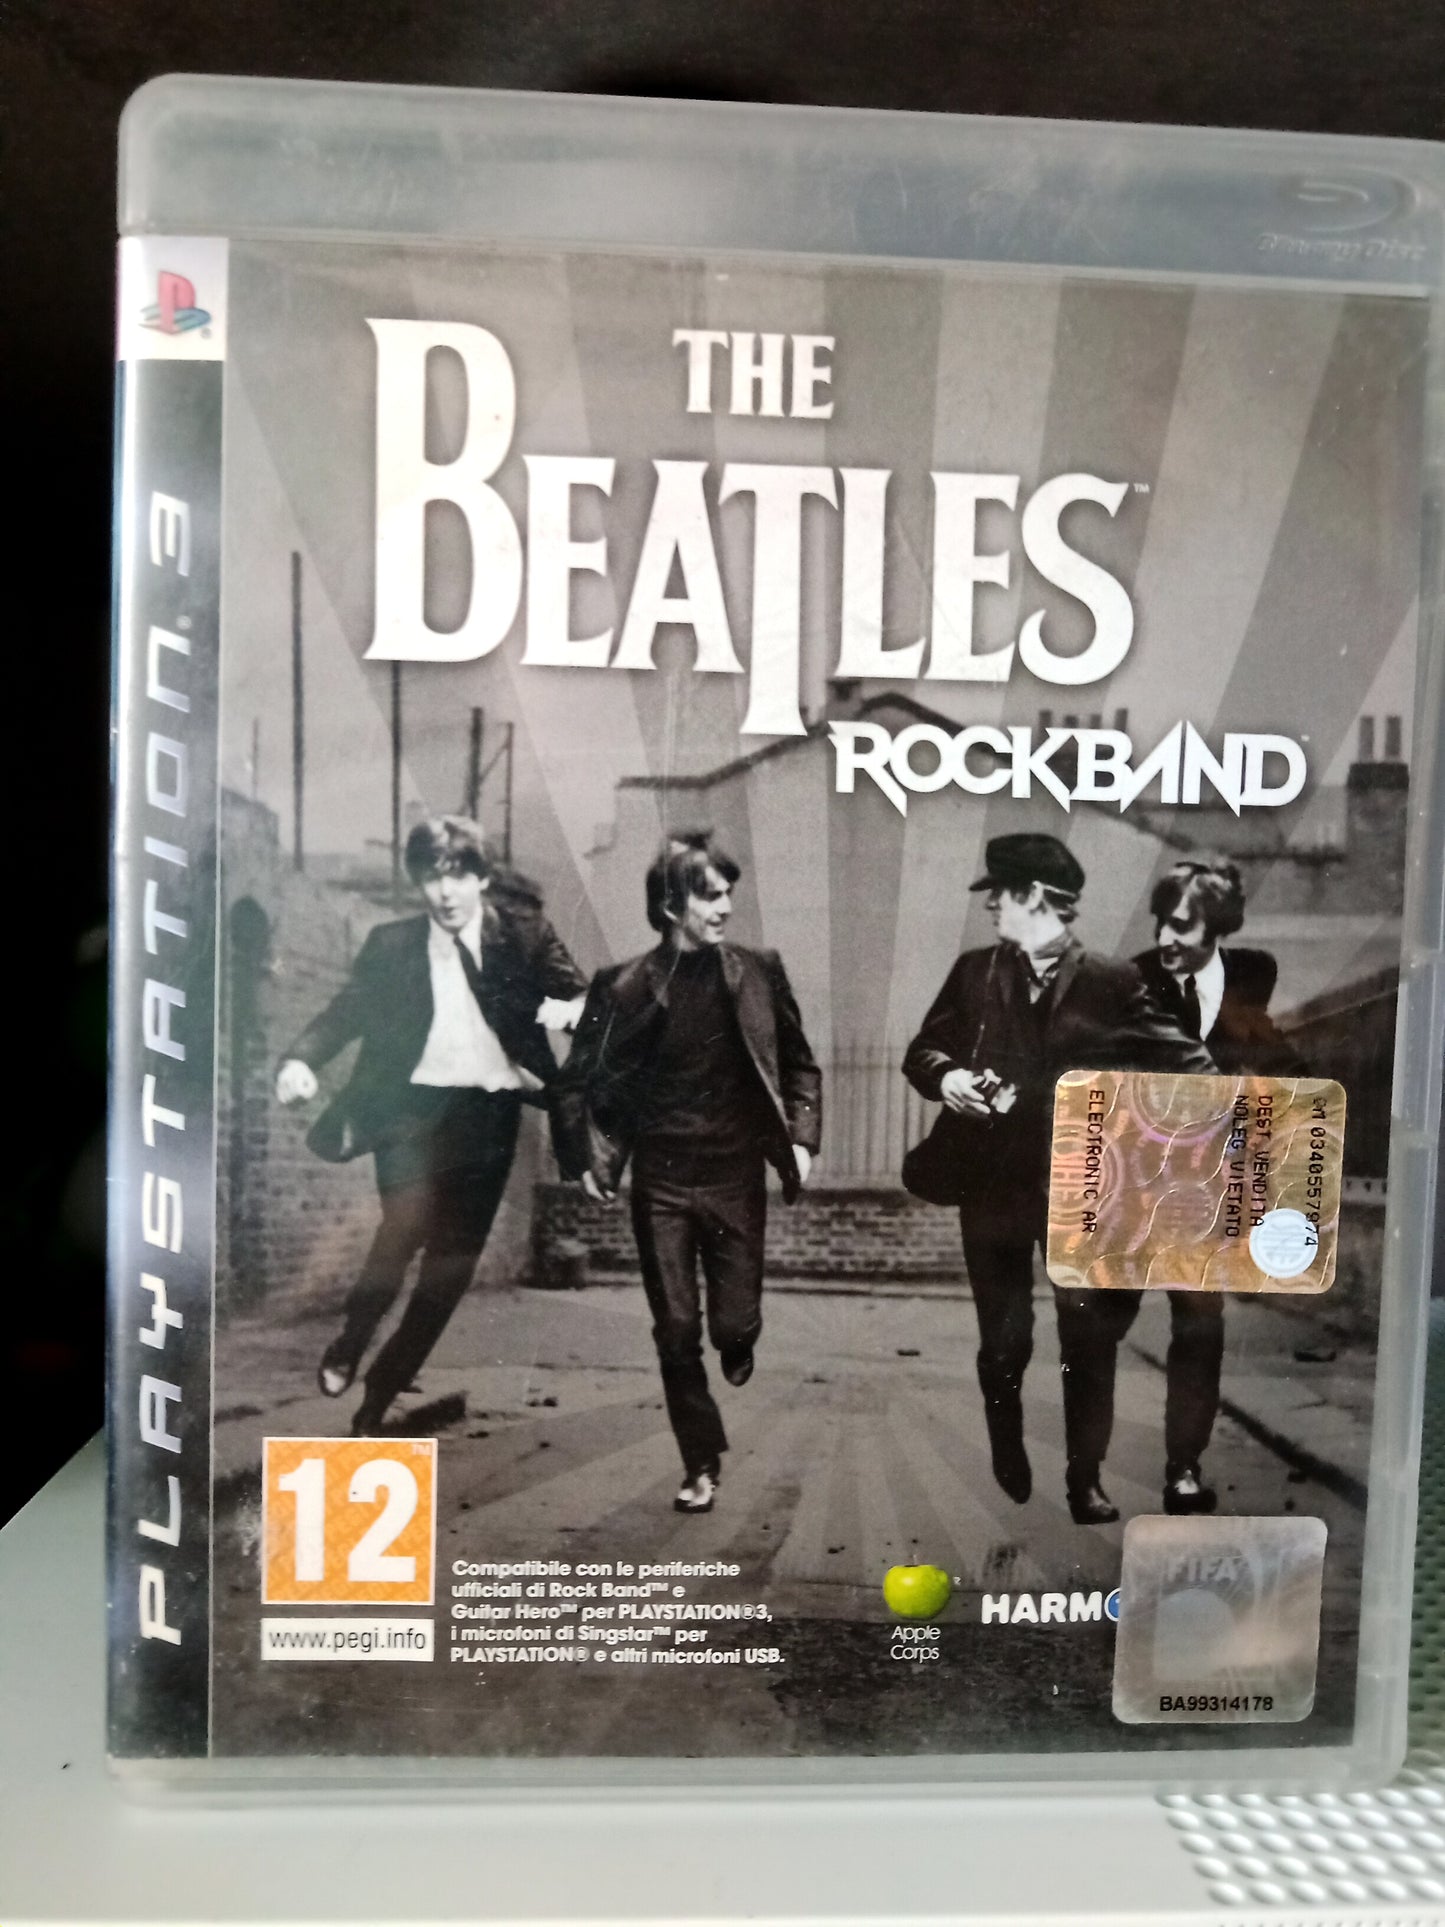 Rock band Beatles